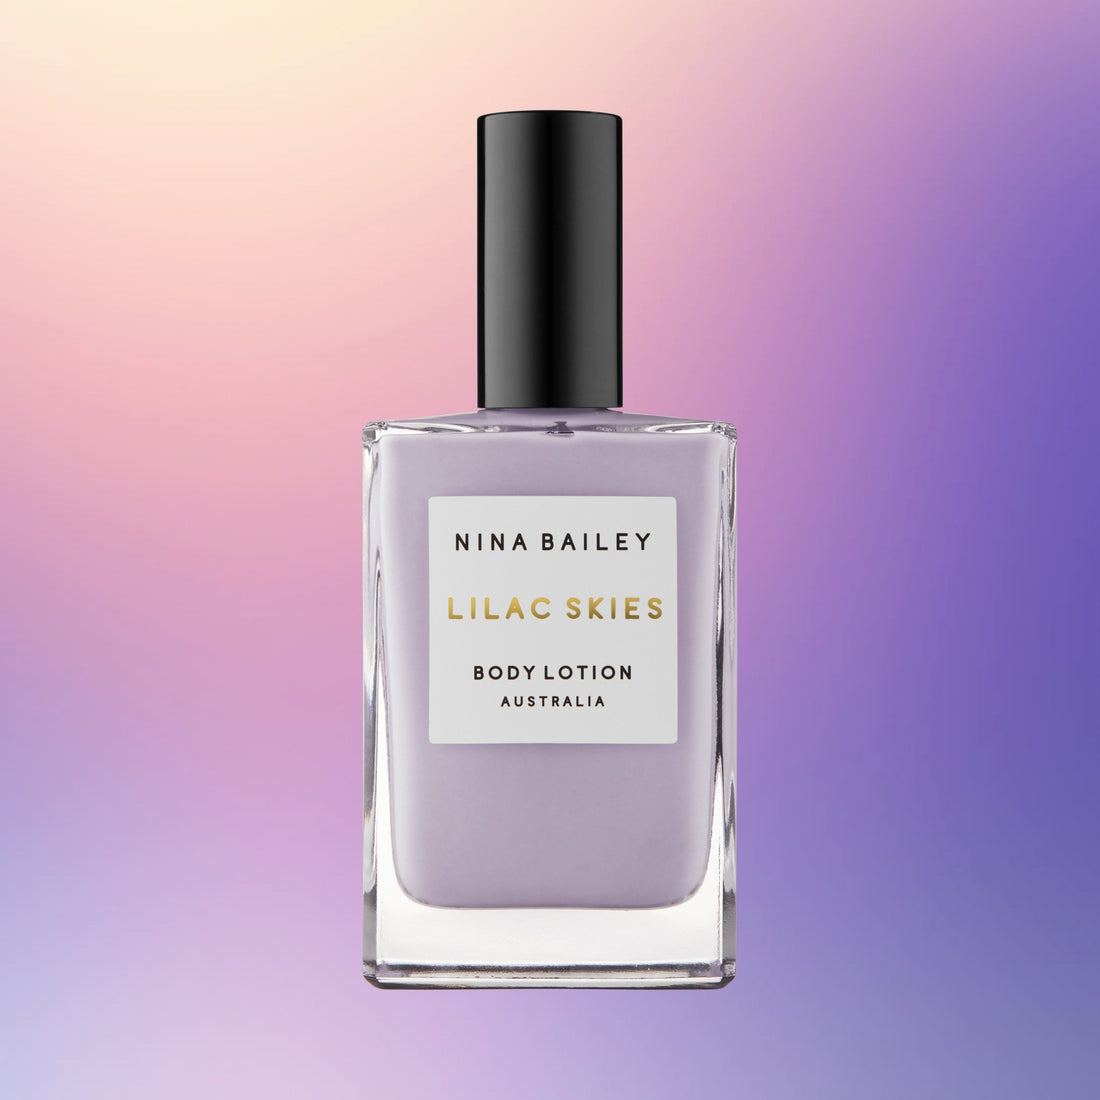 Lilac Skies Body Lotion - Nina Bailey